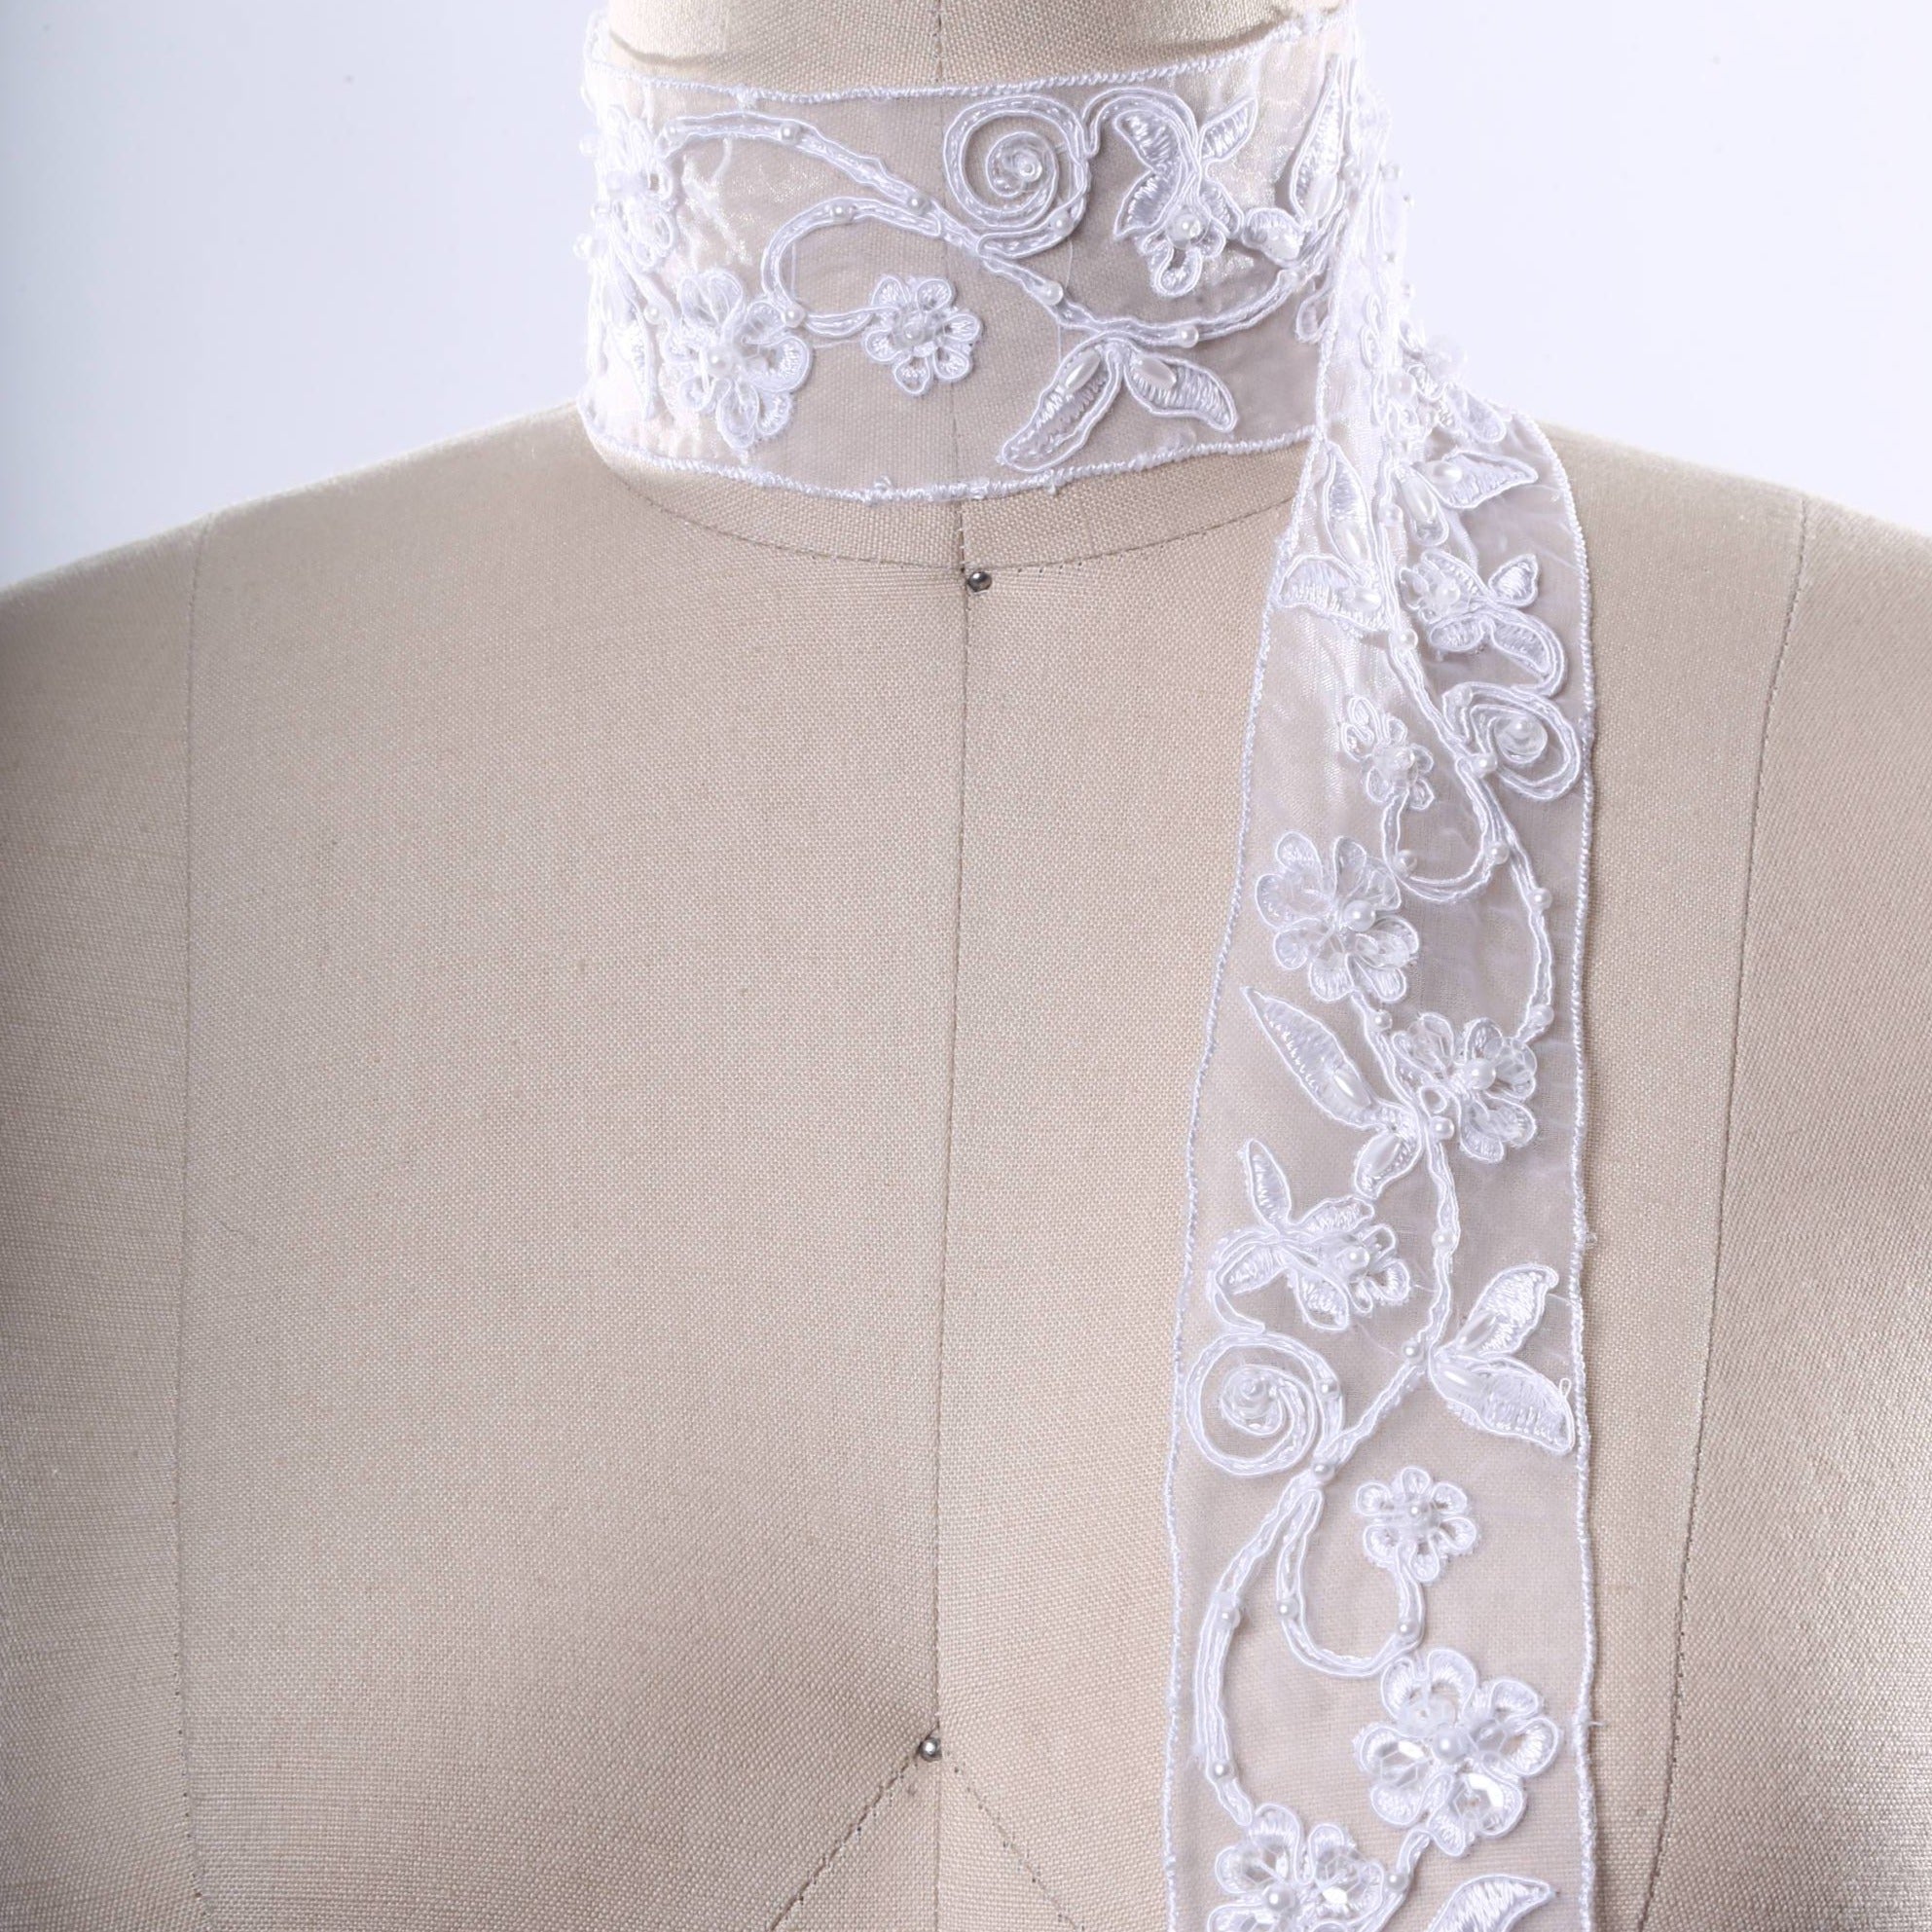 1 Yard White Beaded Flower and Swirl Delicate Chiffon Bridal Versatile Lace Trim